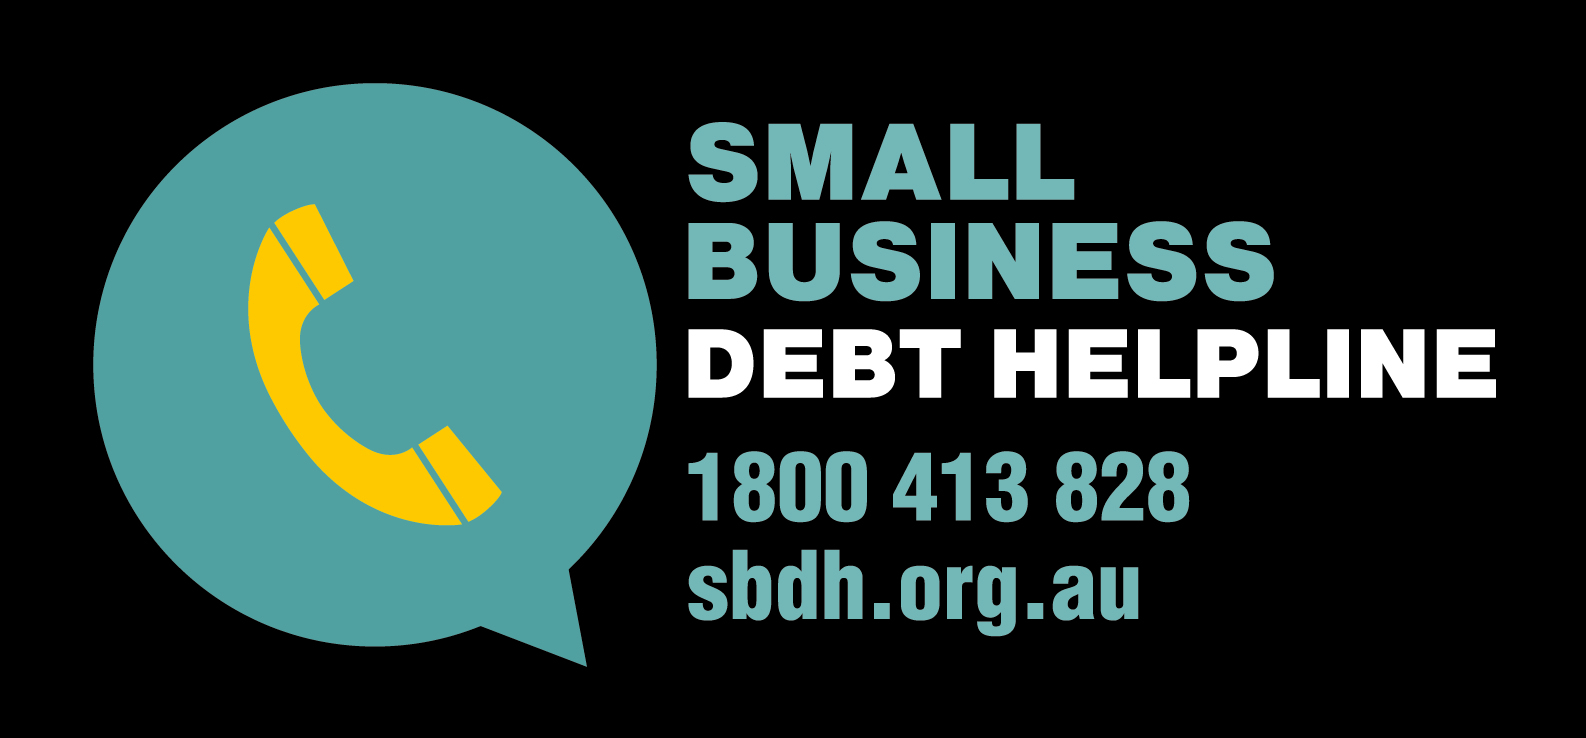 Small business debt helpline